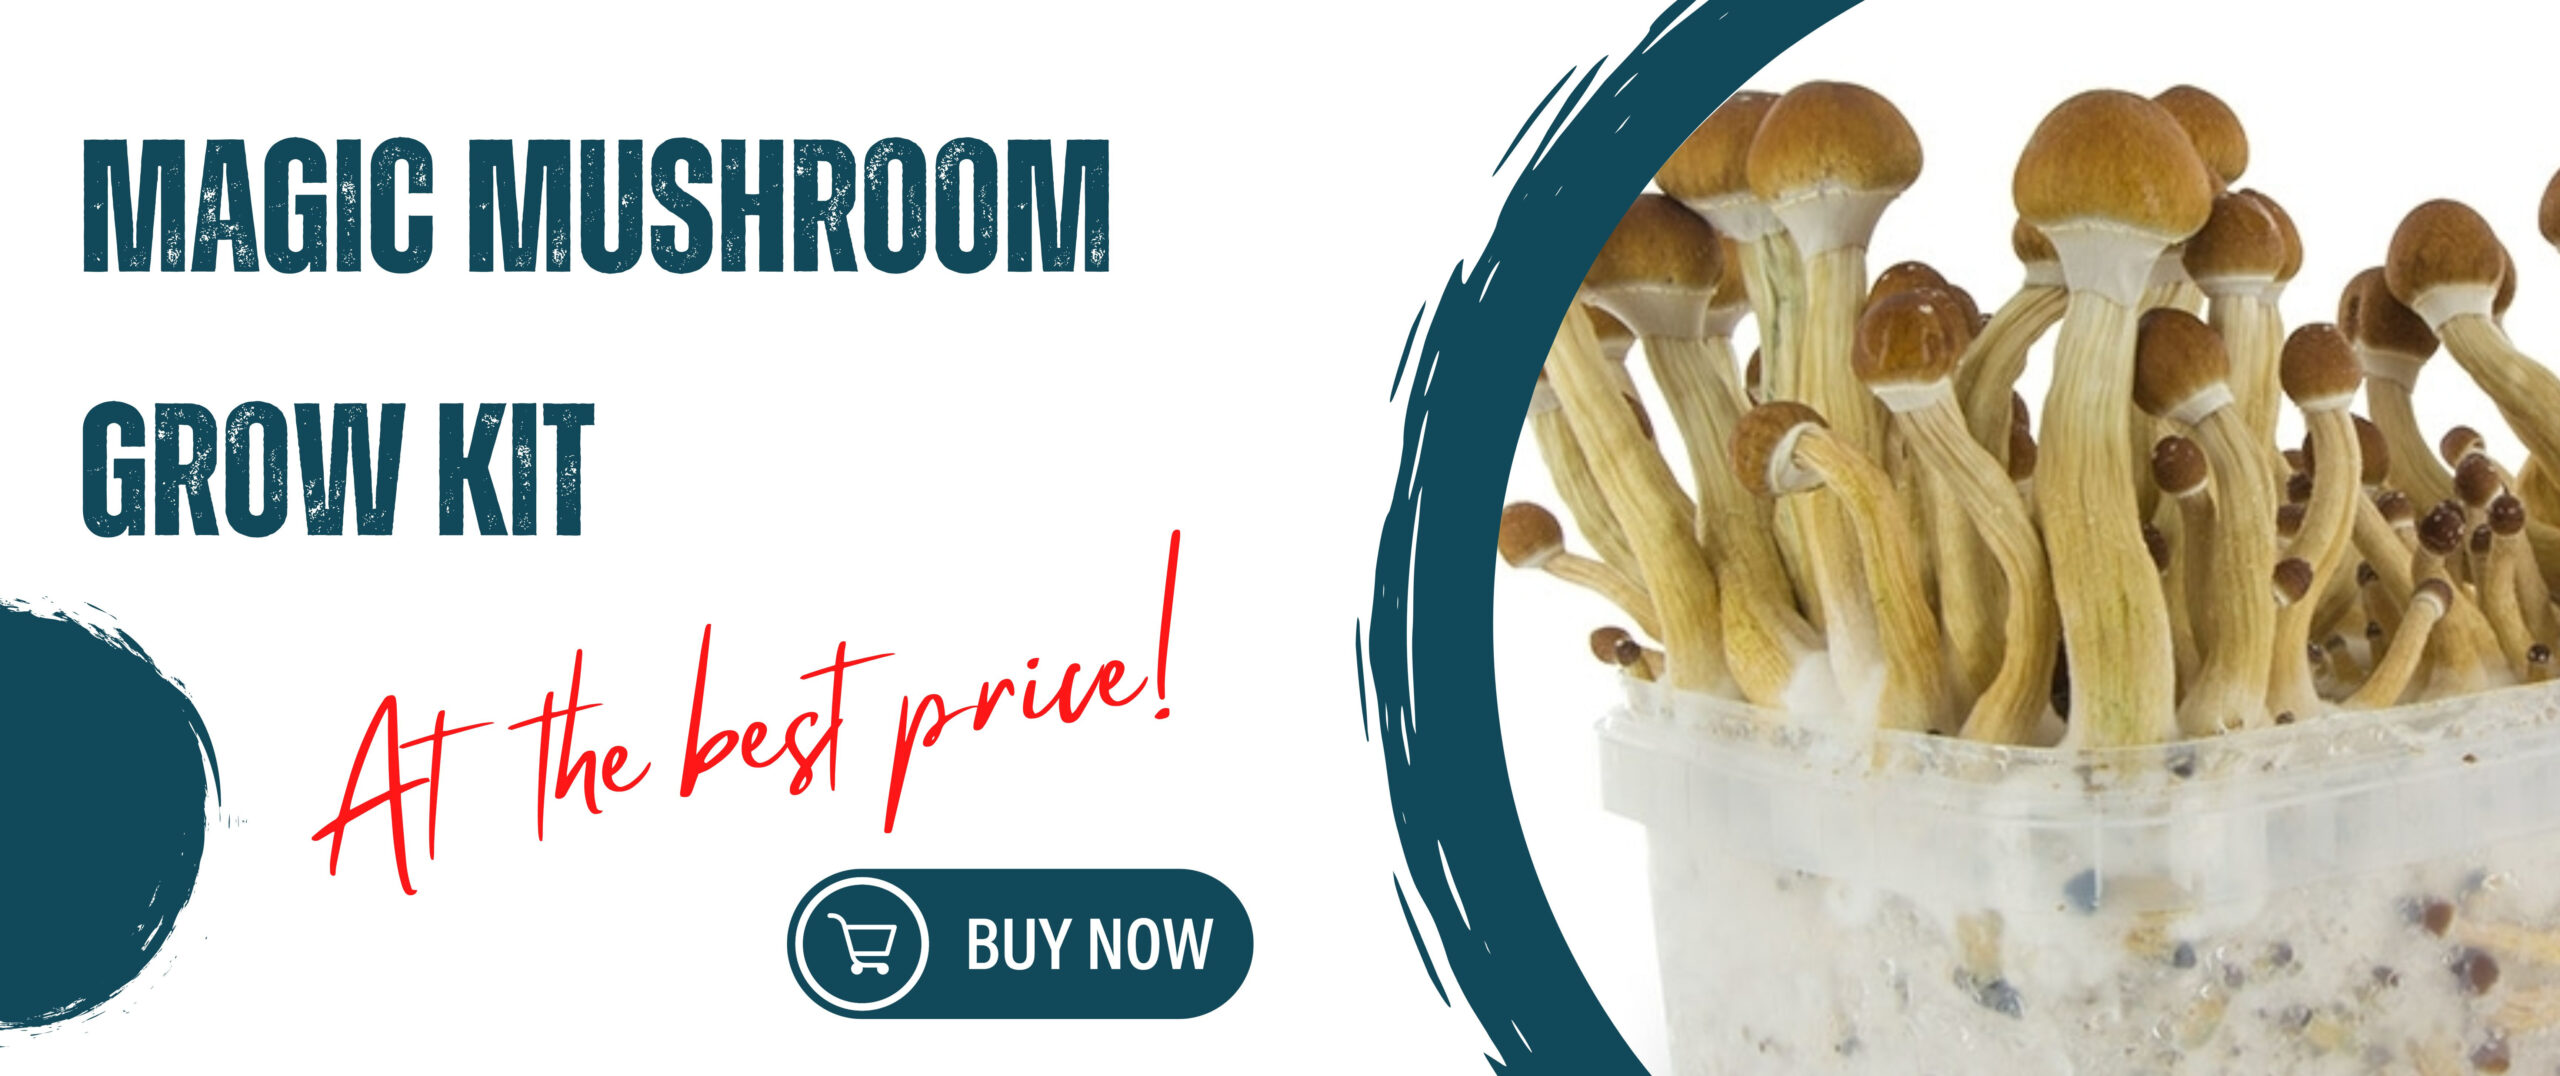 Buy magic mushrooms kit